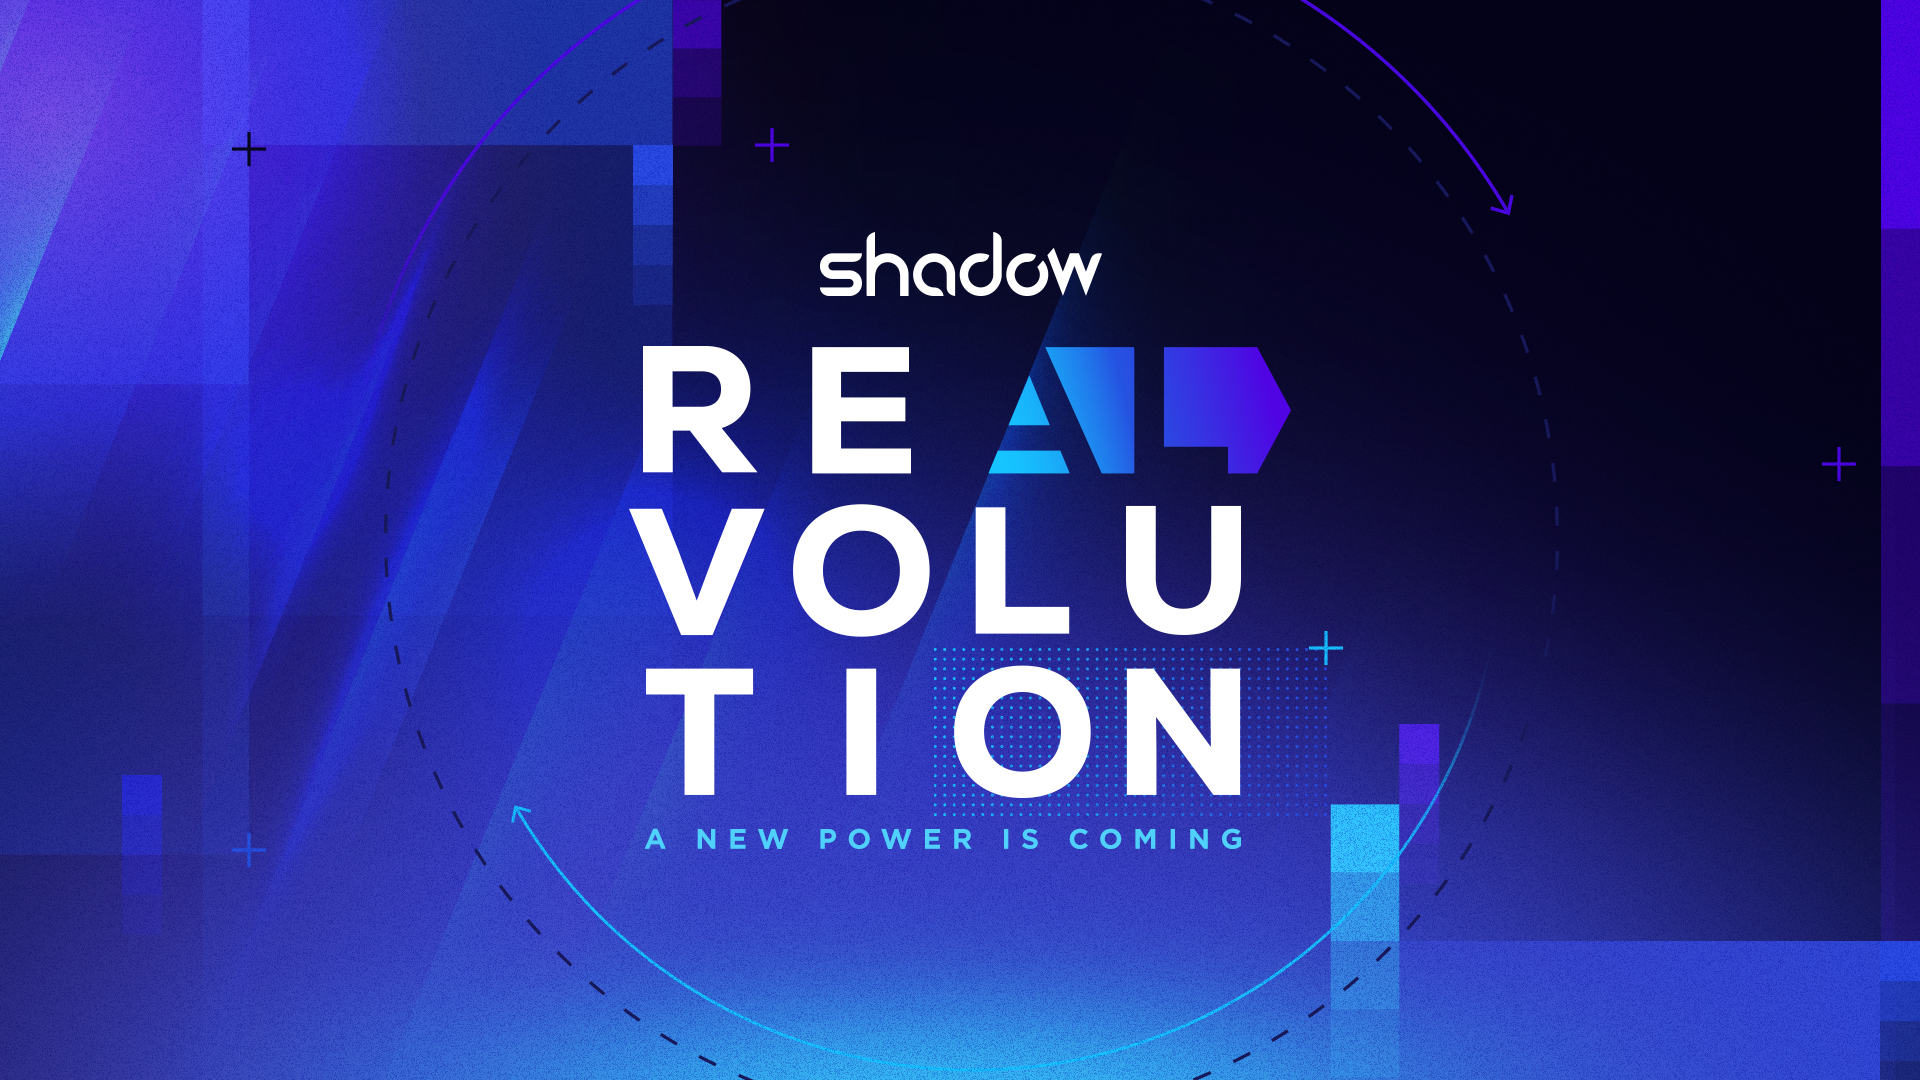 KV_SHADOW_REVOLUTION_NEW